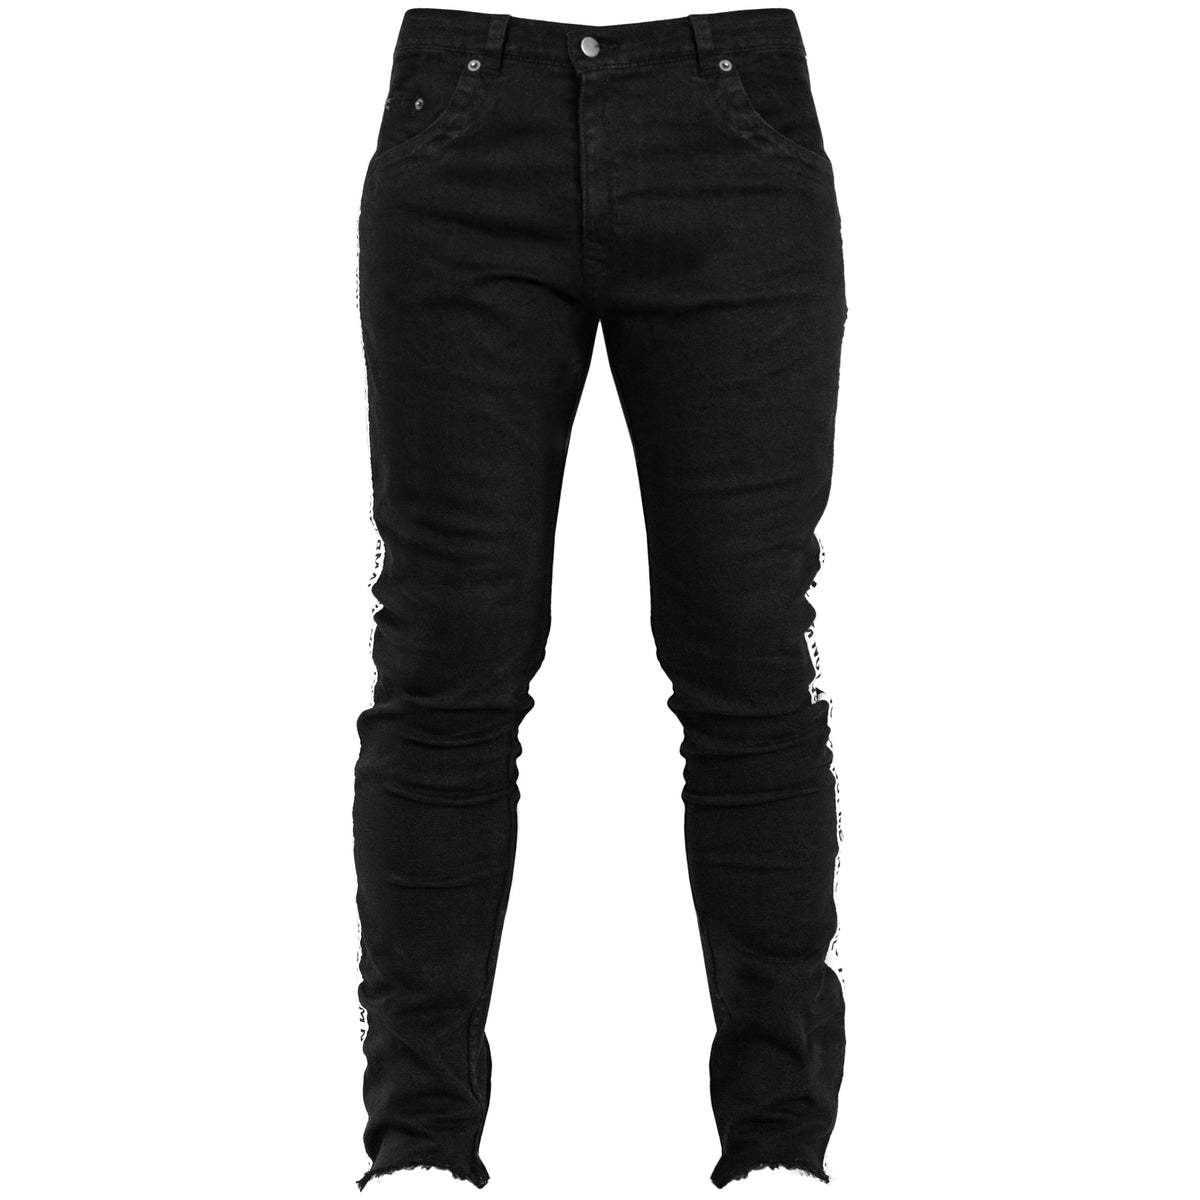 INFORMAL APPAREL | Taped Jeans : Black ($95) sz. 28-36